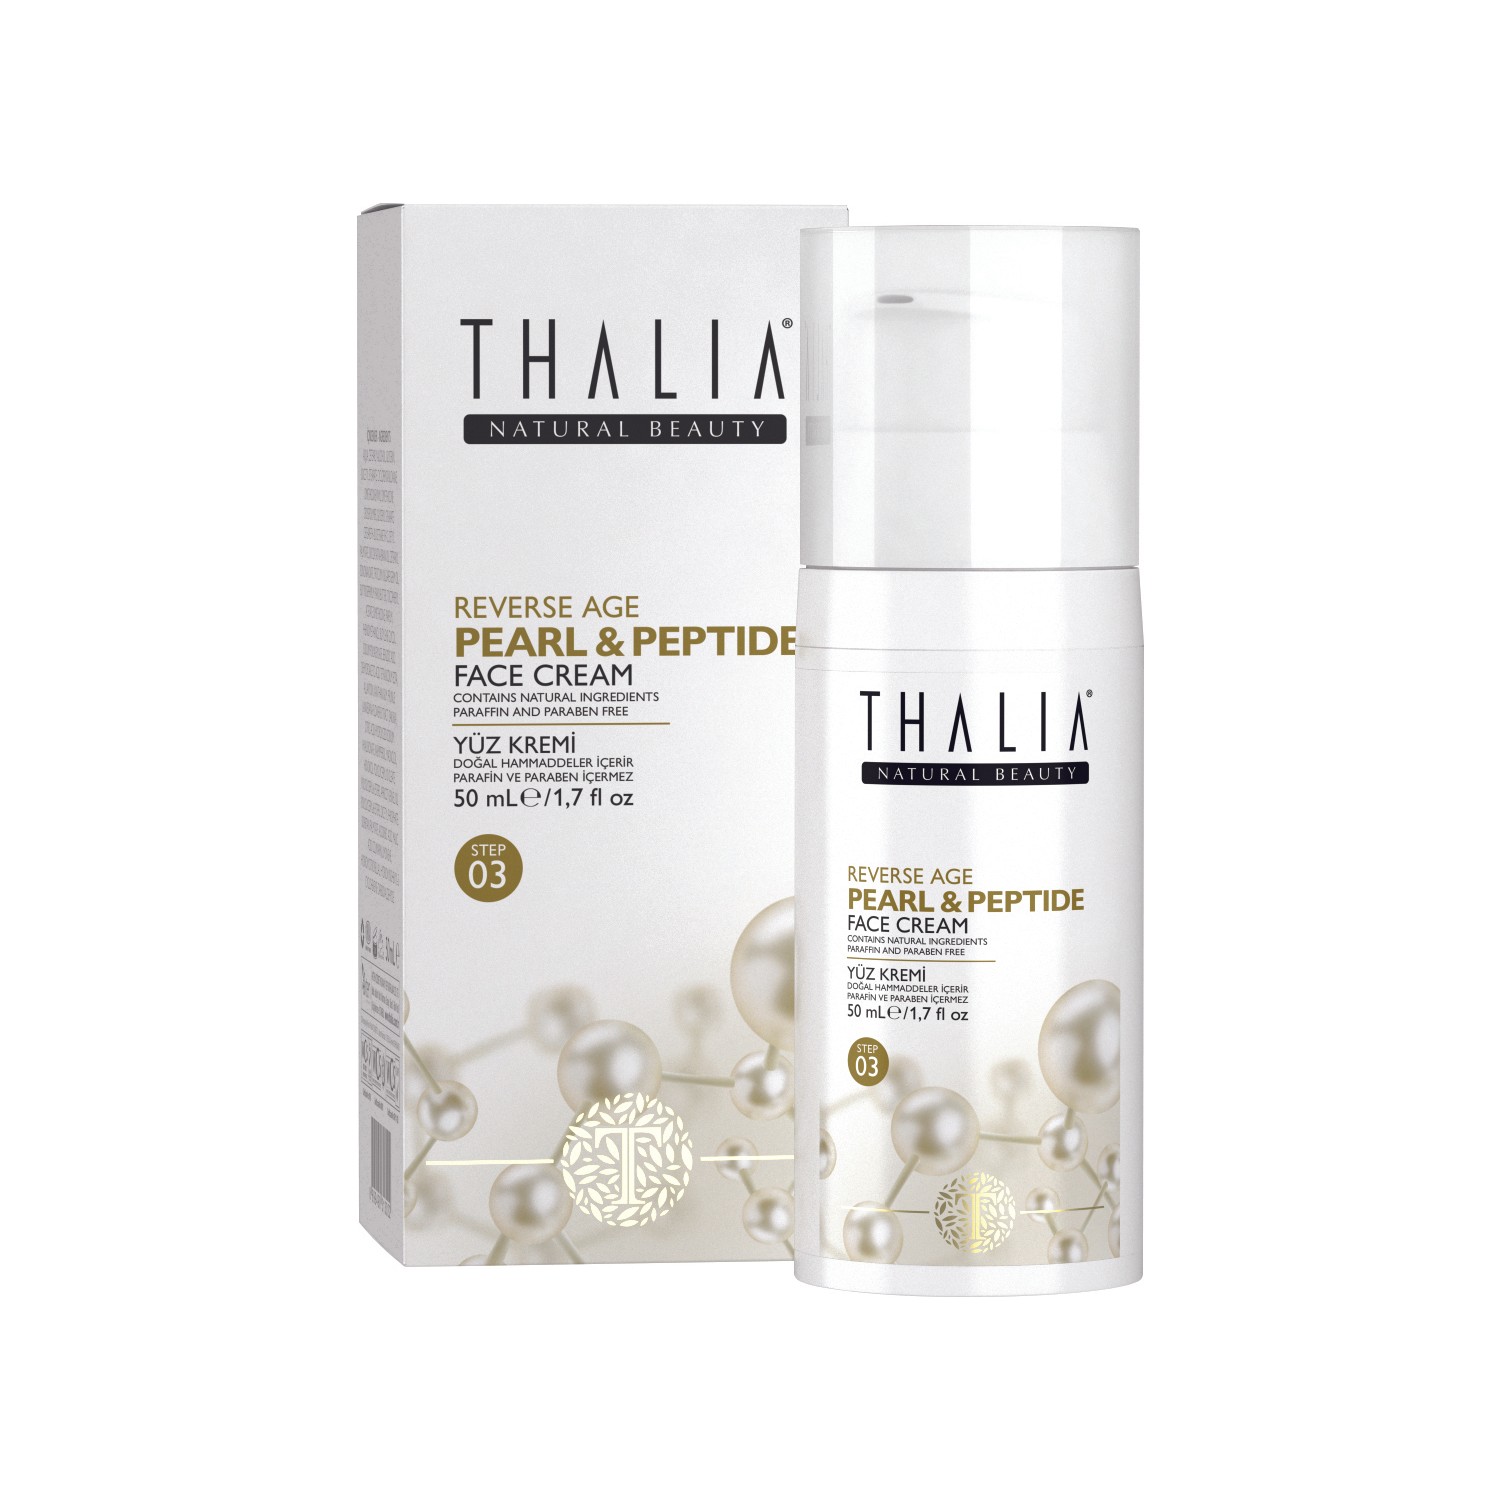 Омолаживающий крем для лица Thalia Pearl & Peptide 40+, 50 мл thalia natural beauty reverse age pearl